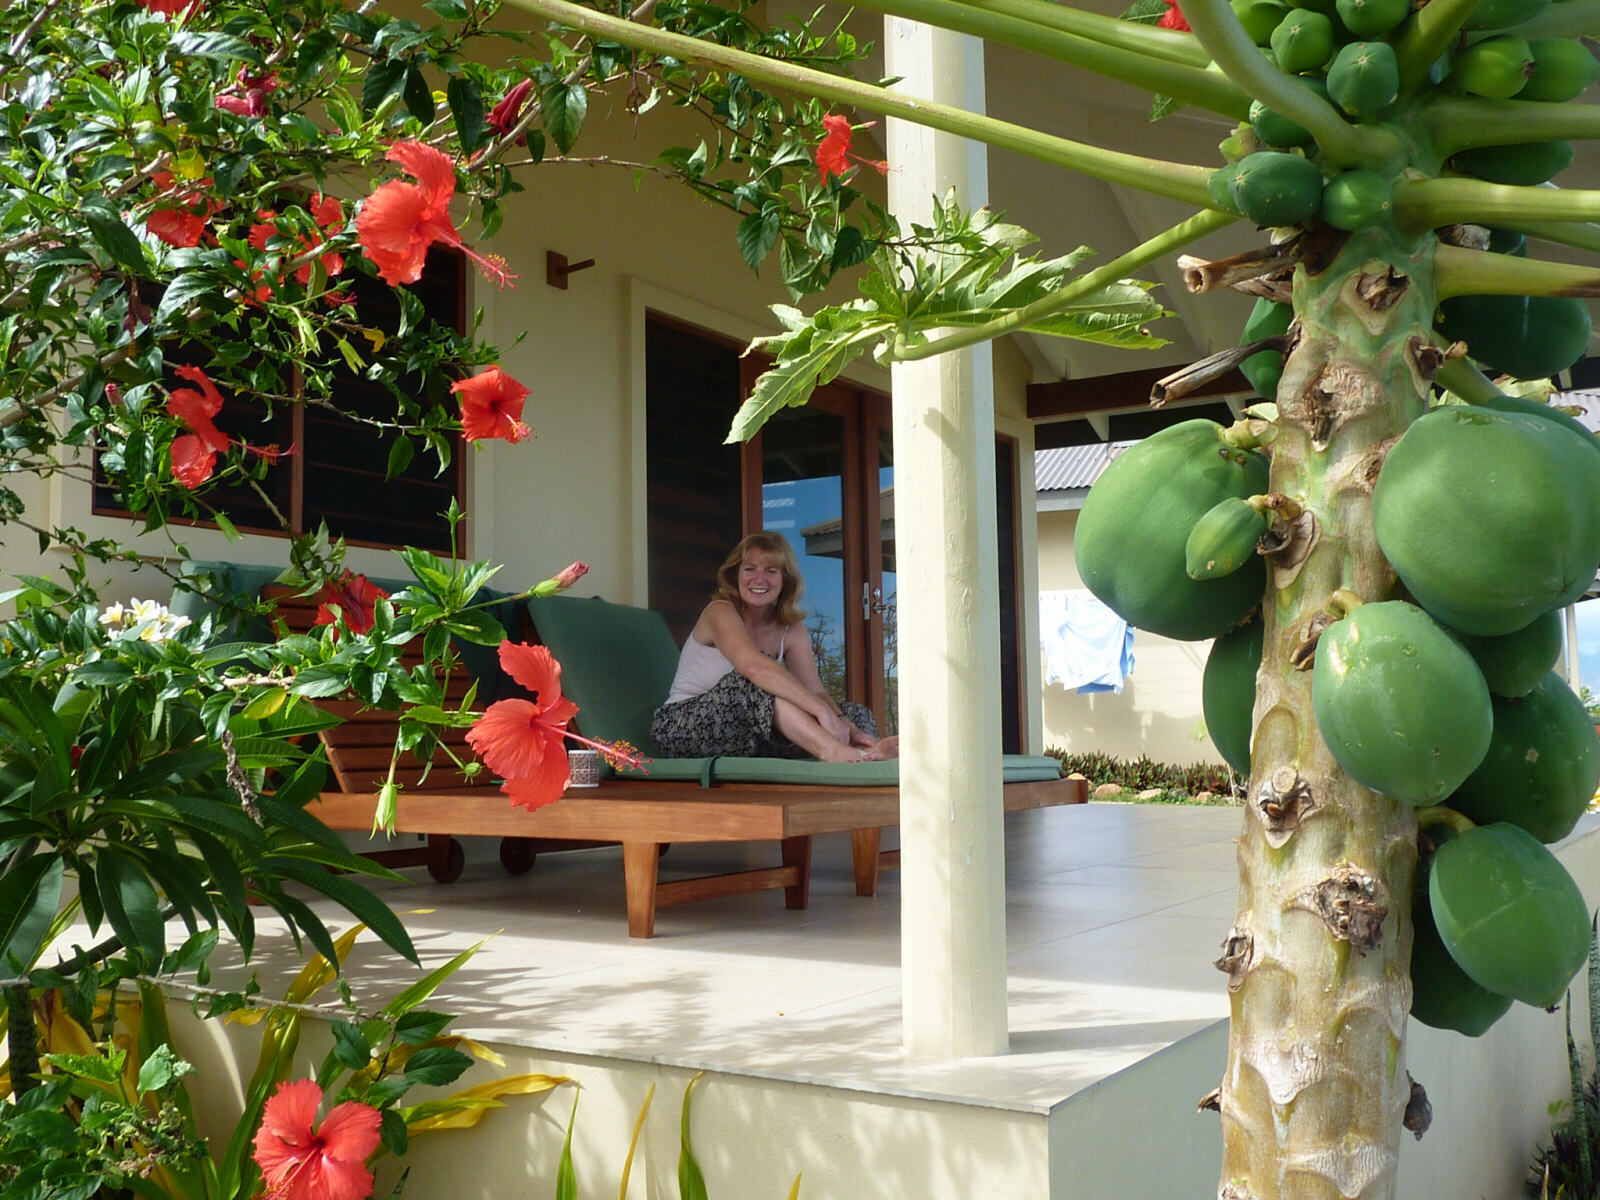 Our bungalow in Volivoli Resort near Rakiraki, Fiji